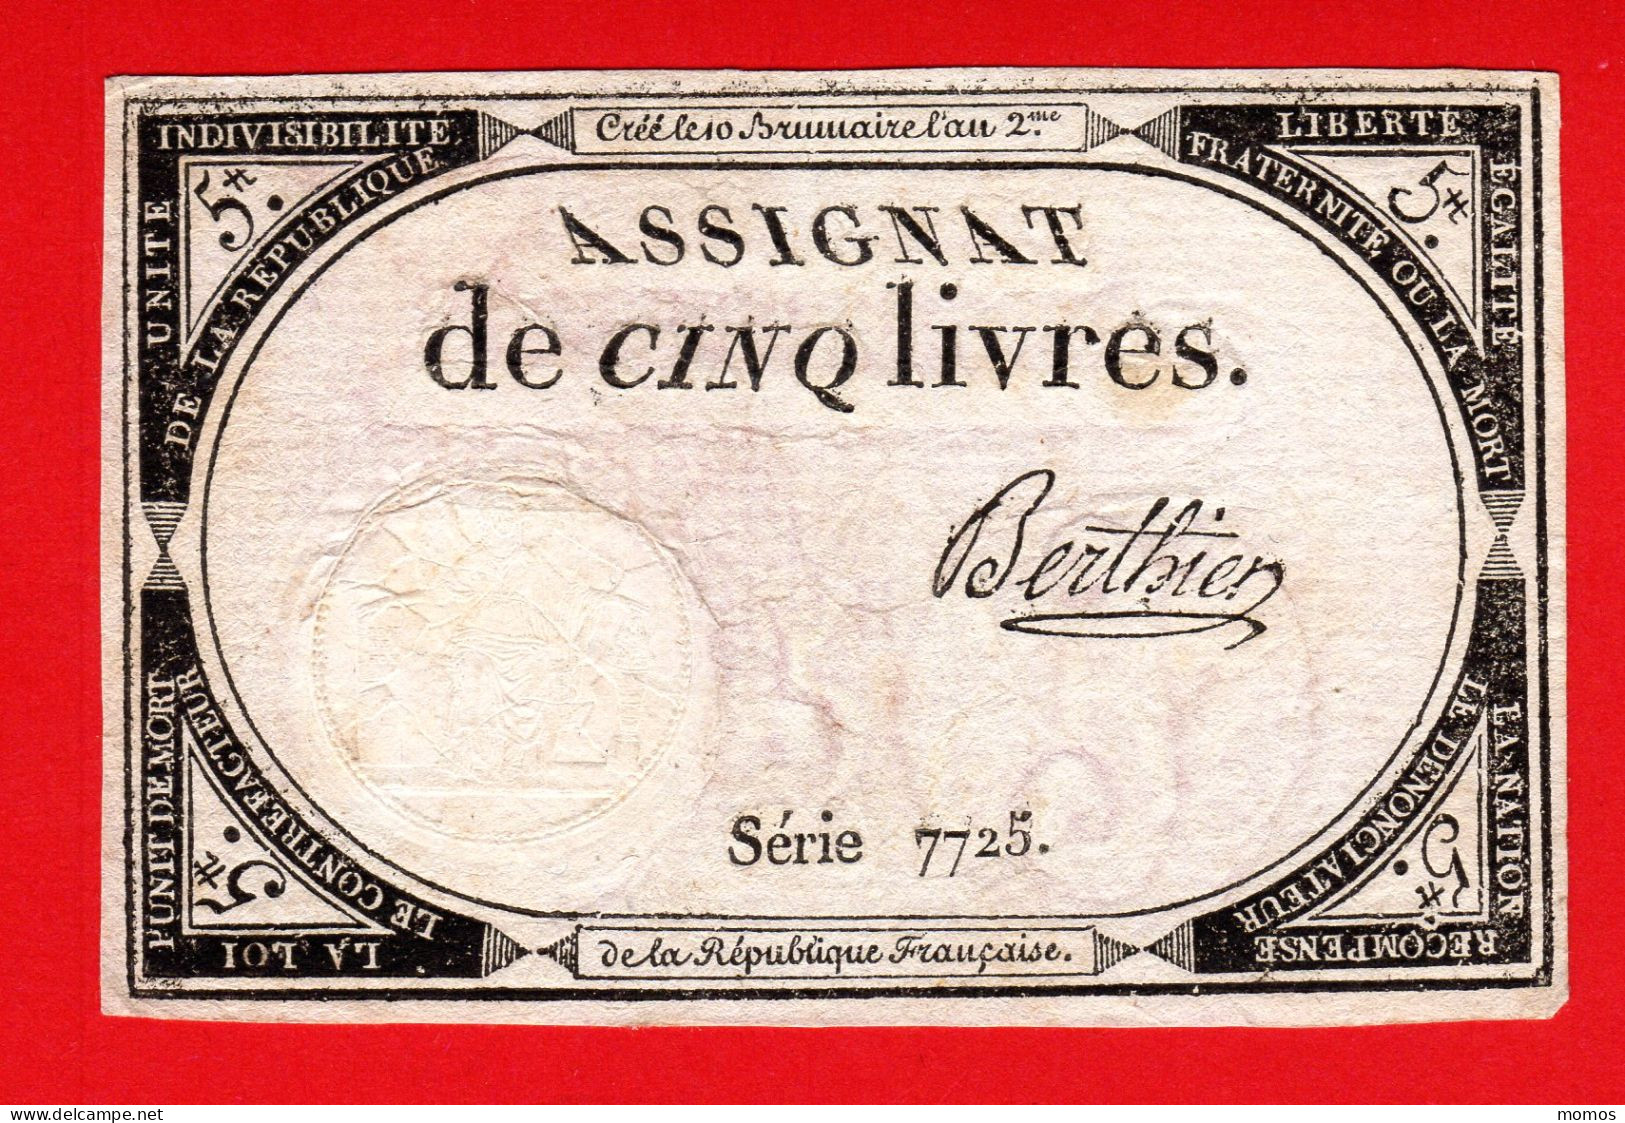 ASSIGNAT DE 5 LIVRES - 10 BRUMAIRE AN 2  (31 OCTOBRE 1793) - BERTHIER - REVOLUTION FRANCAISE - Assignate